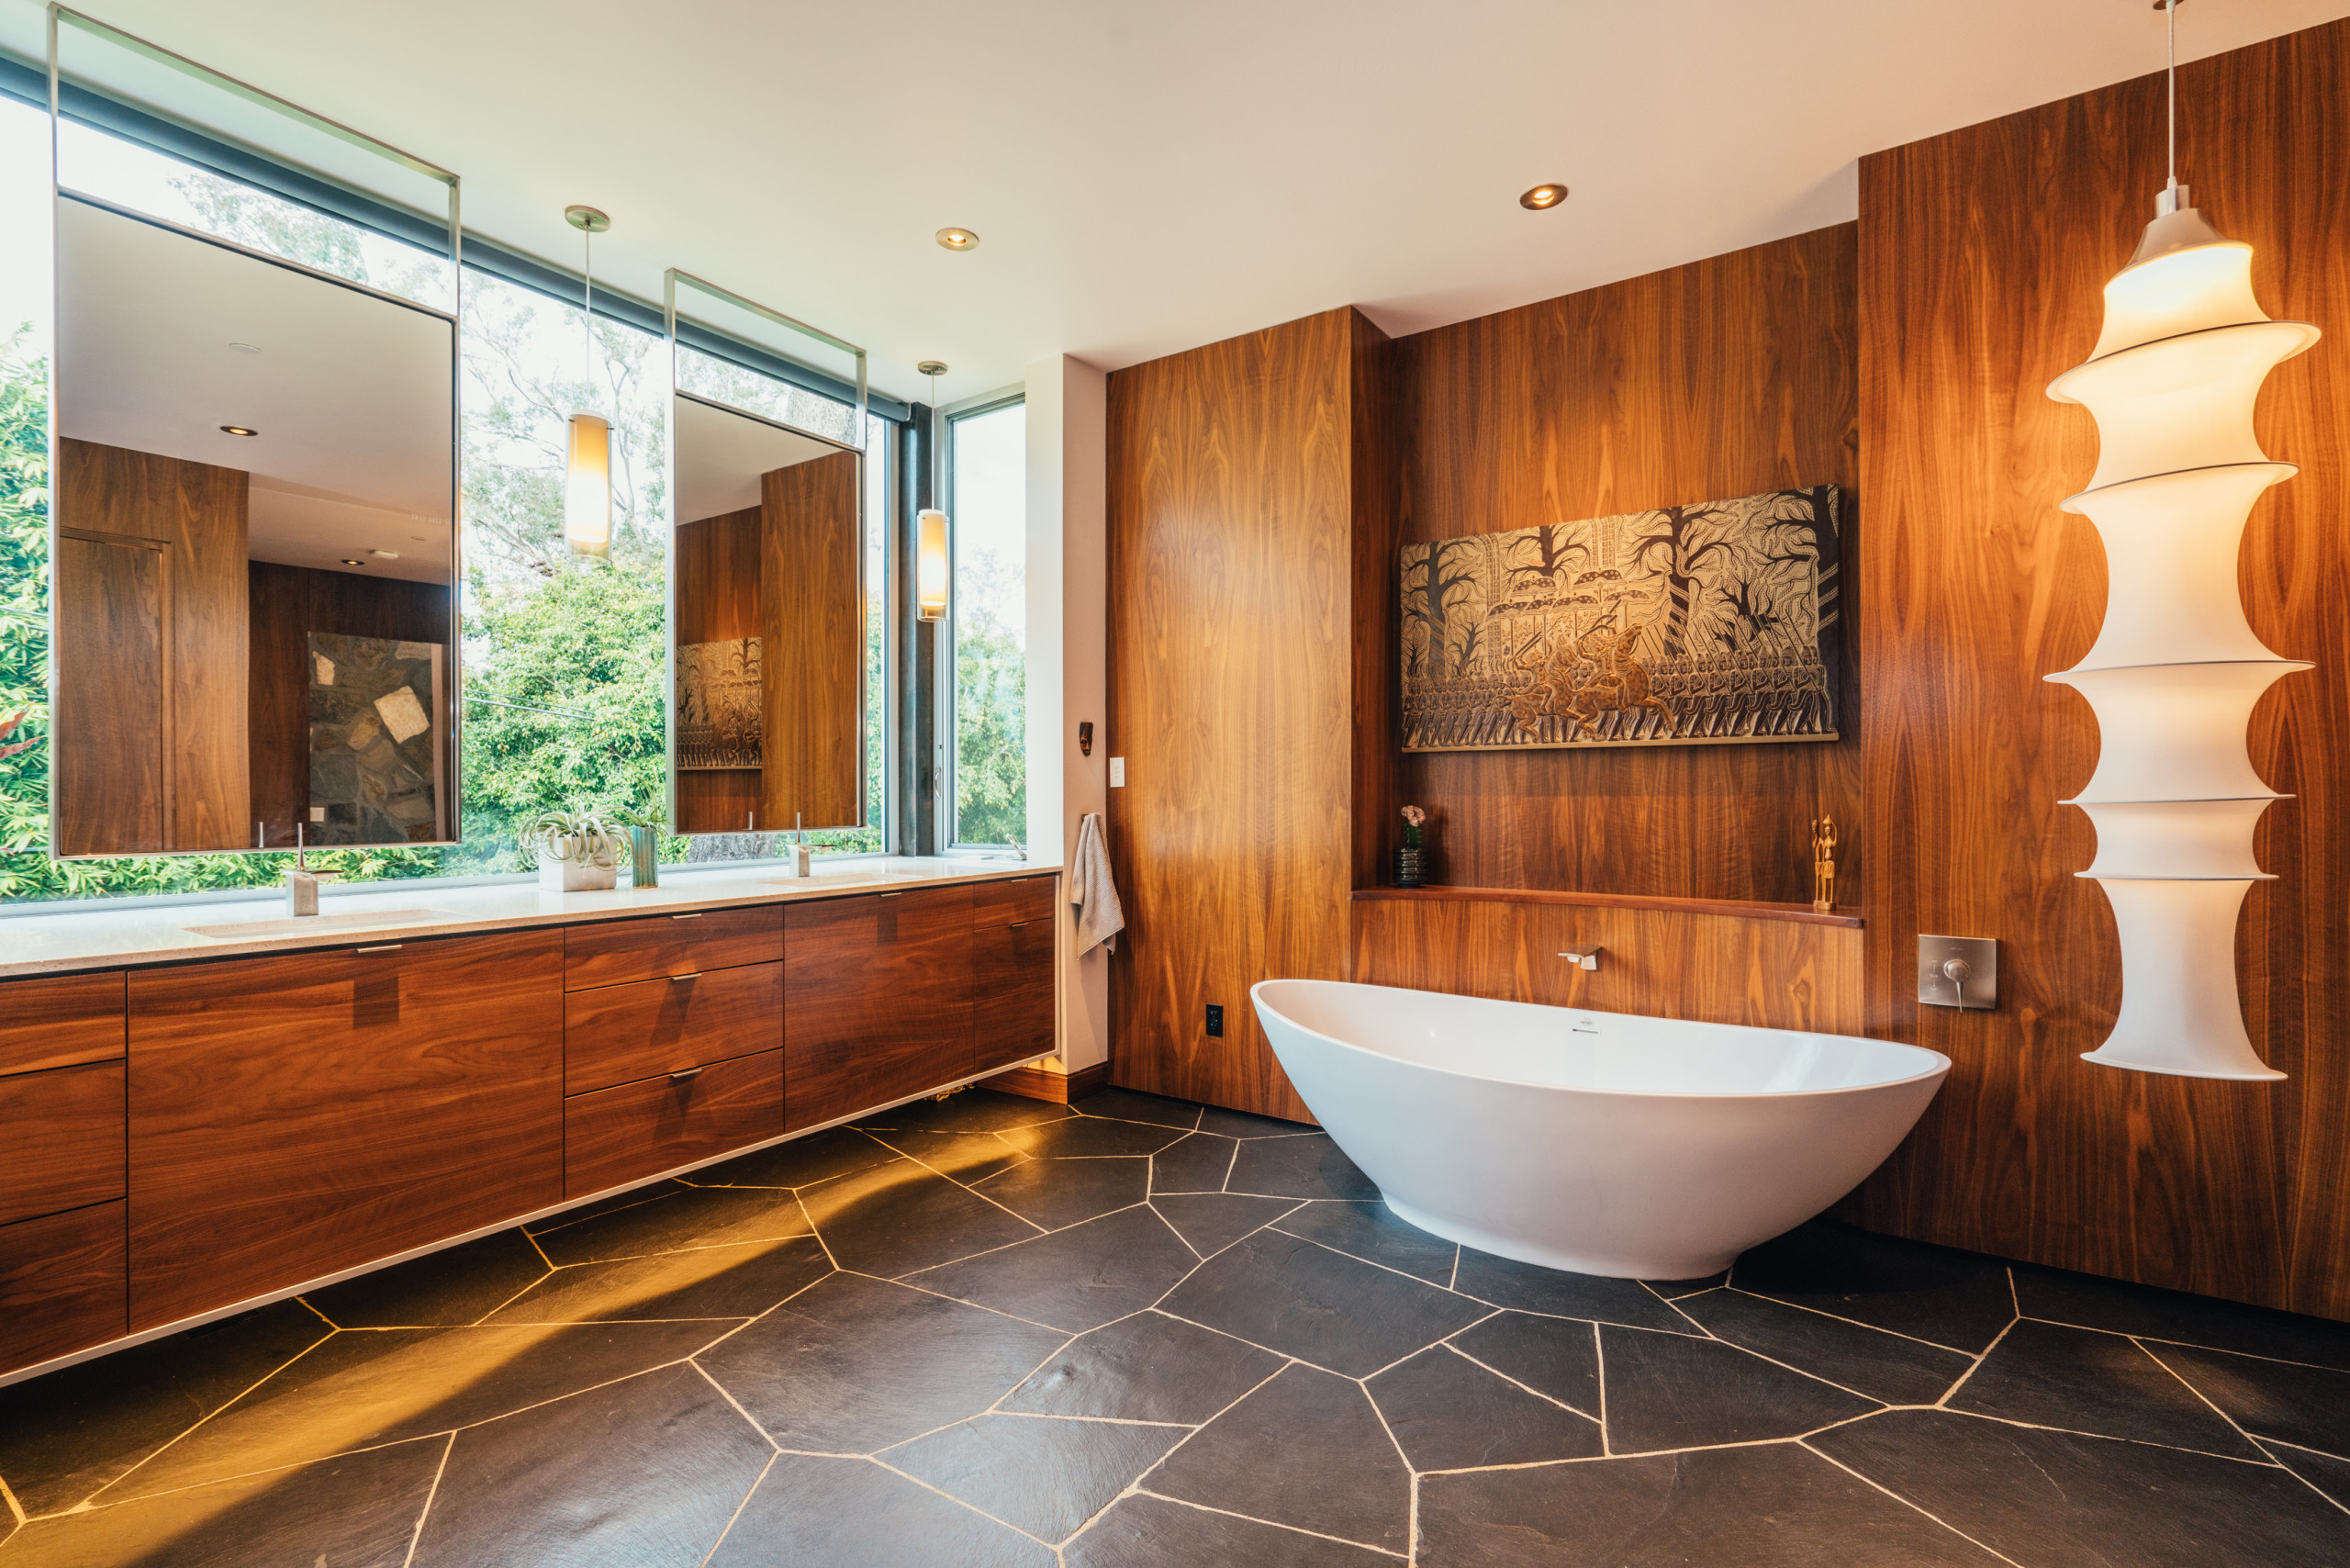 20 Impressive Mid Century Modern Bathroom Designs You Must See 2 